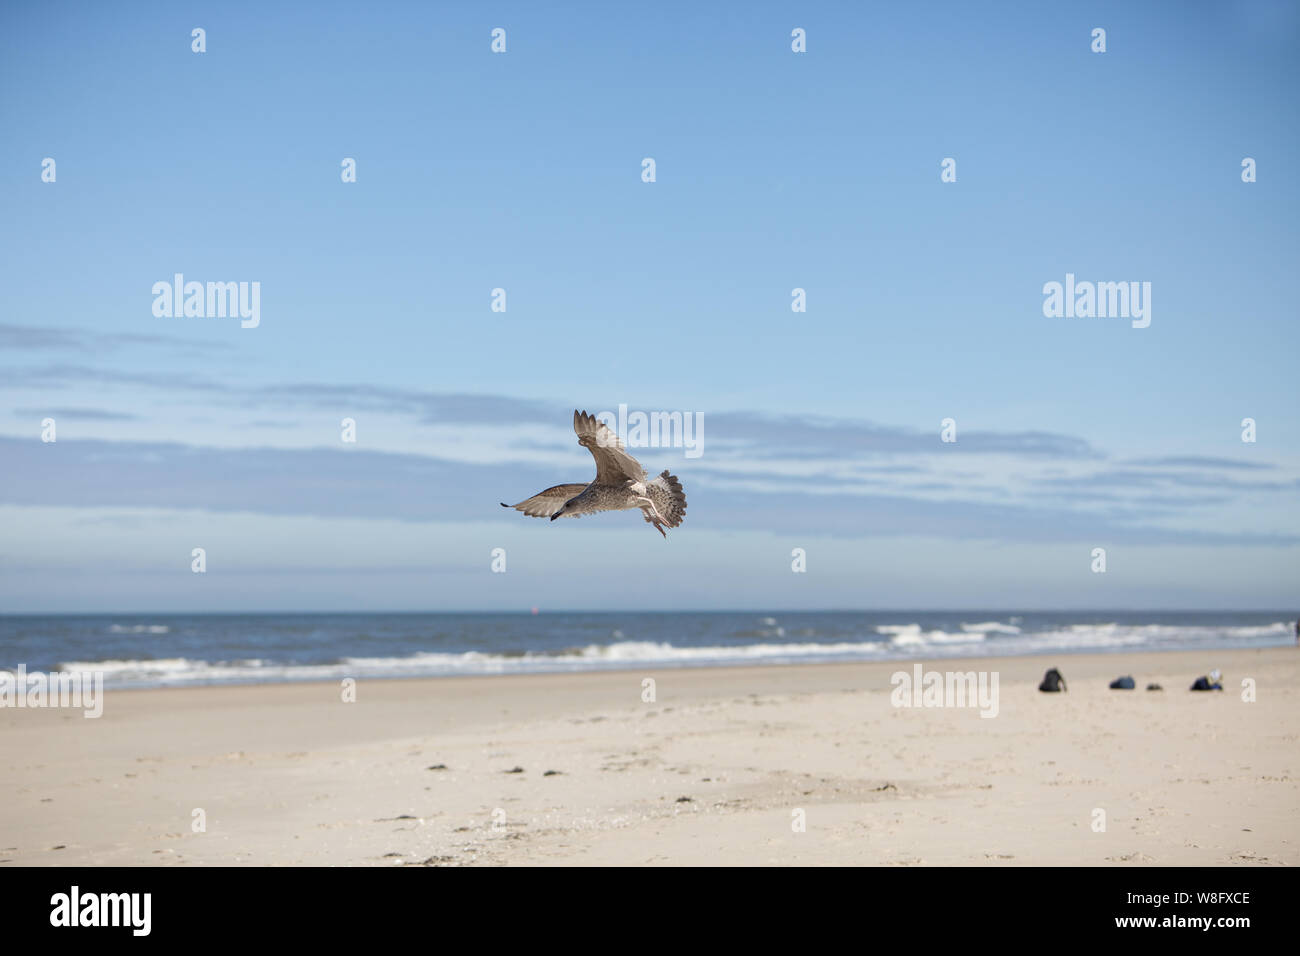 Borkum dunes , a mowe flying at the beach Stock Photo